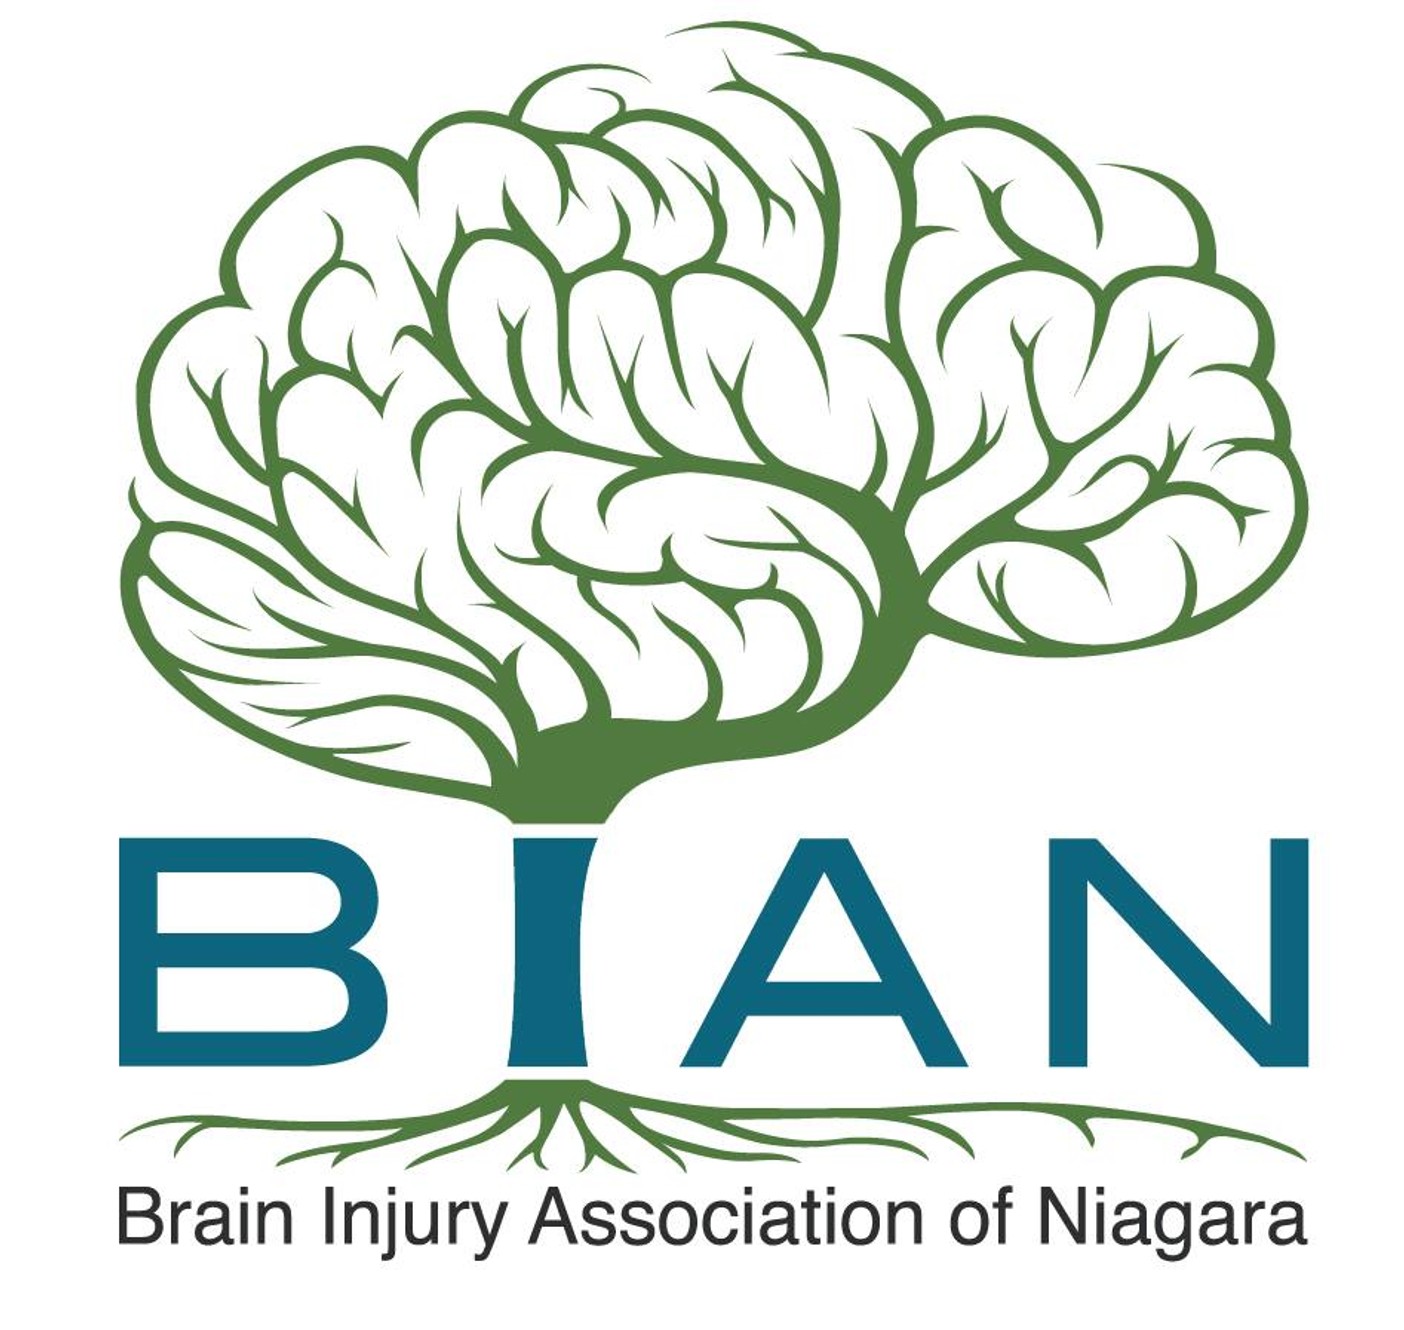 Brain Injury Association of Niagara logo